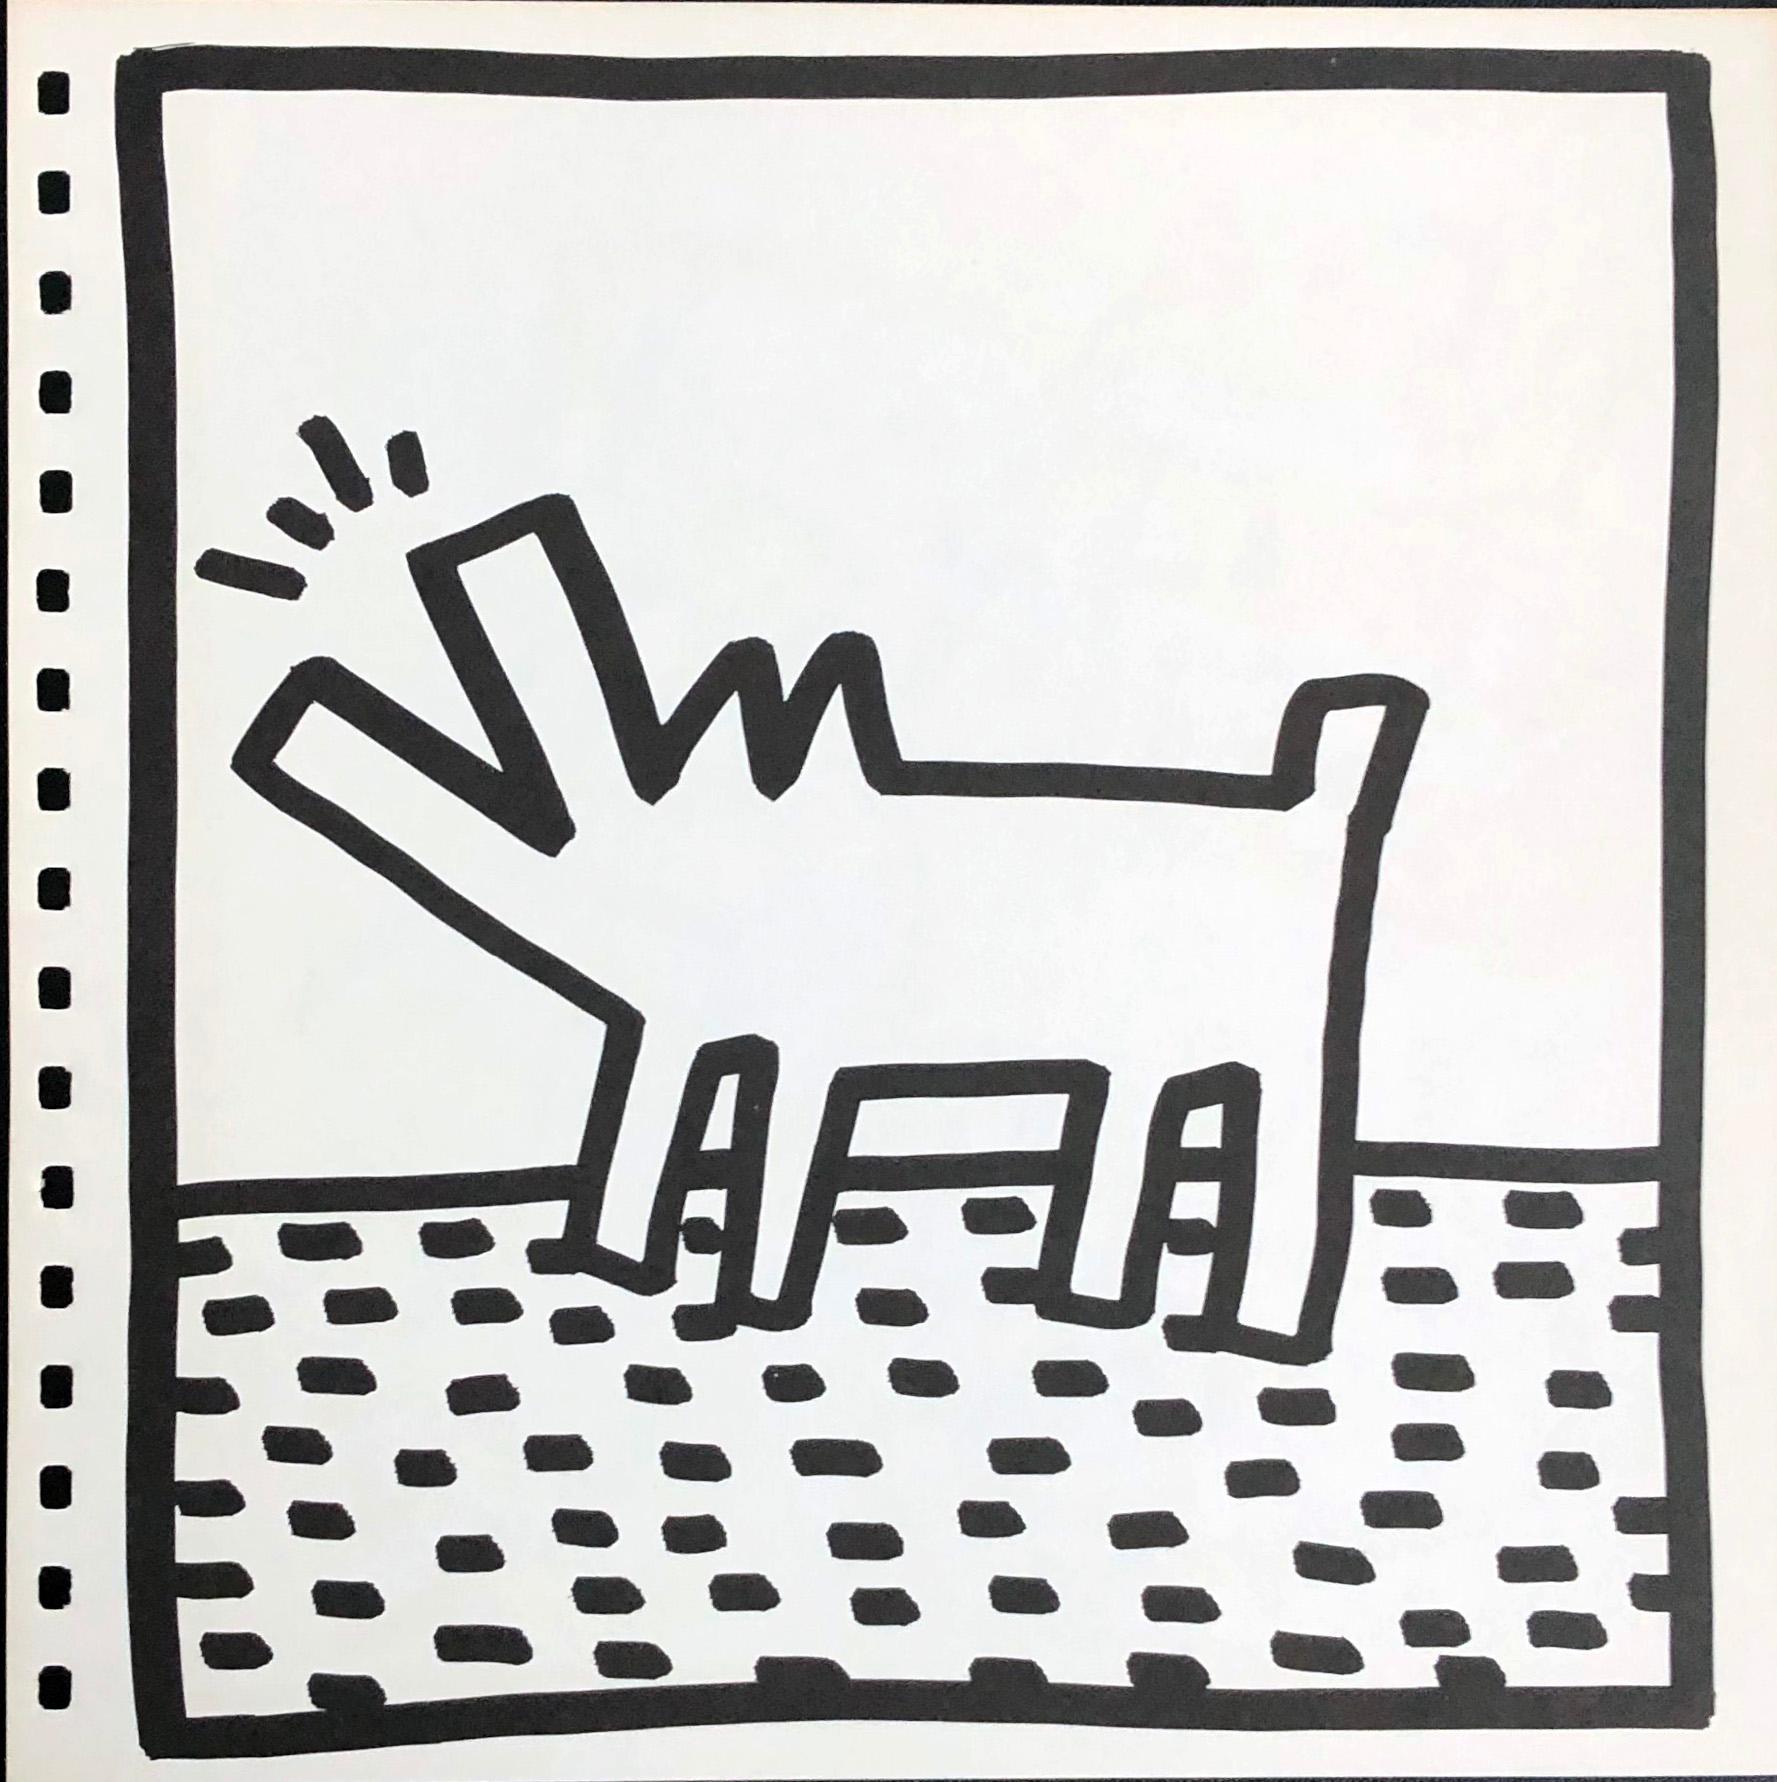 Keith Haring (untitled) barking dog lithograph 1982 (Haring prints)  1